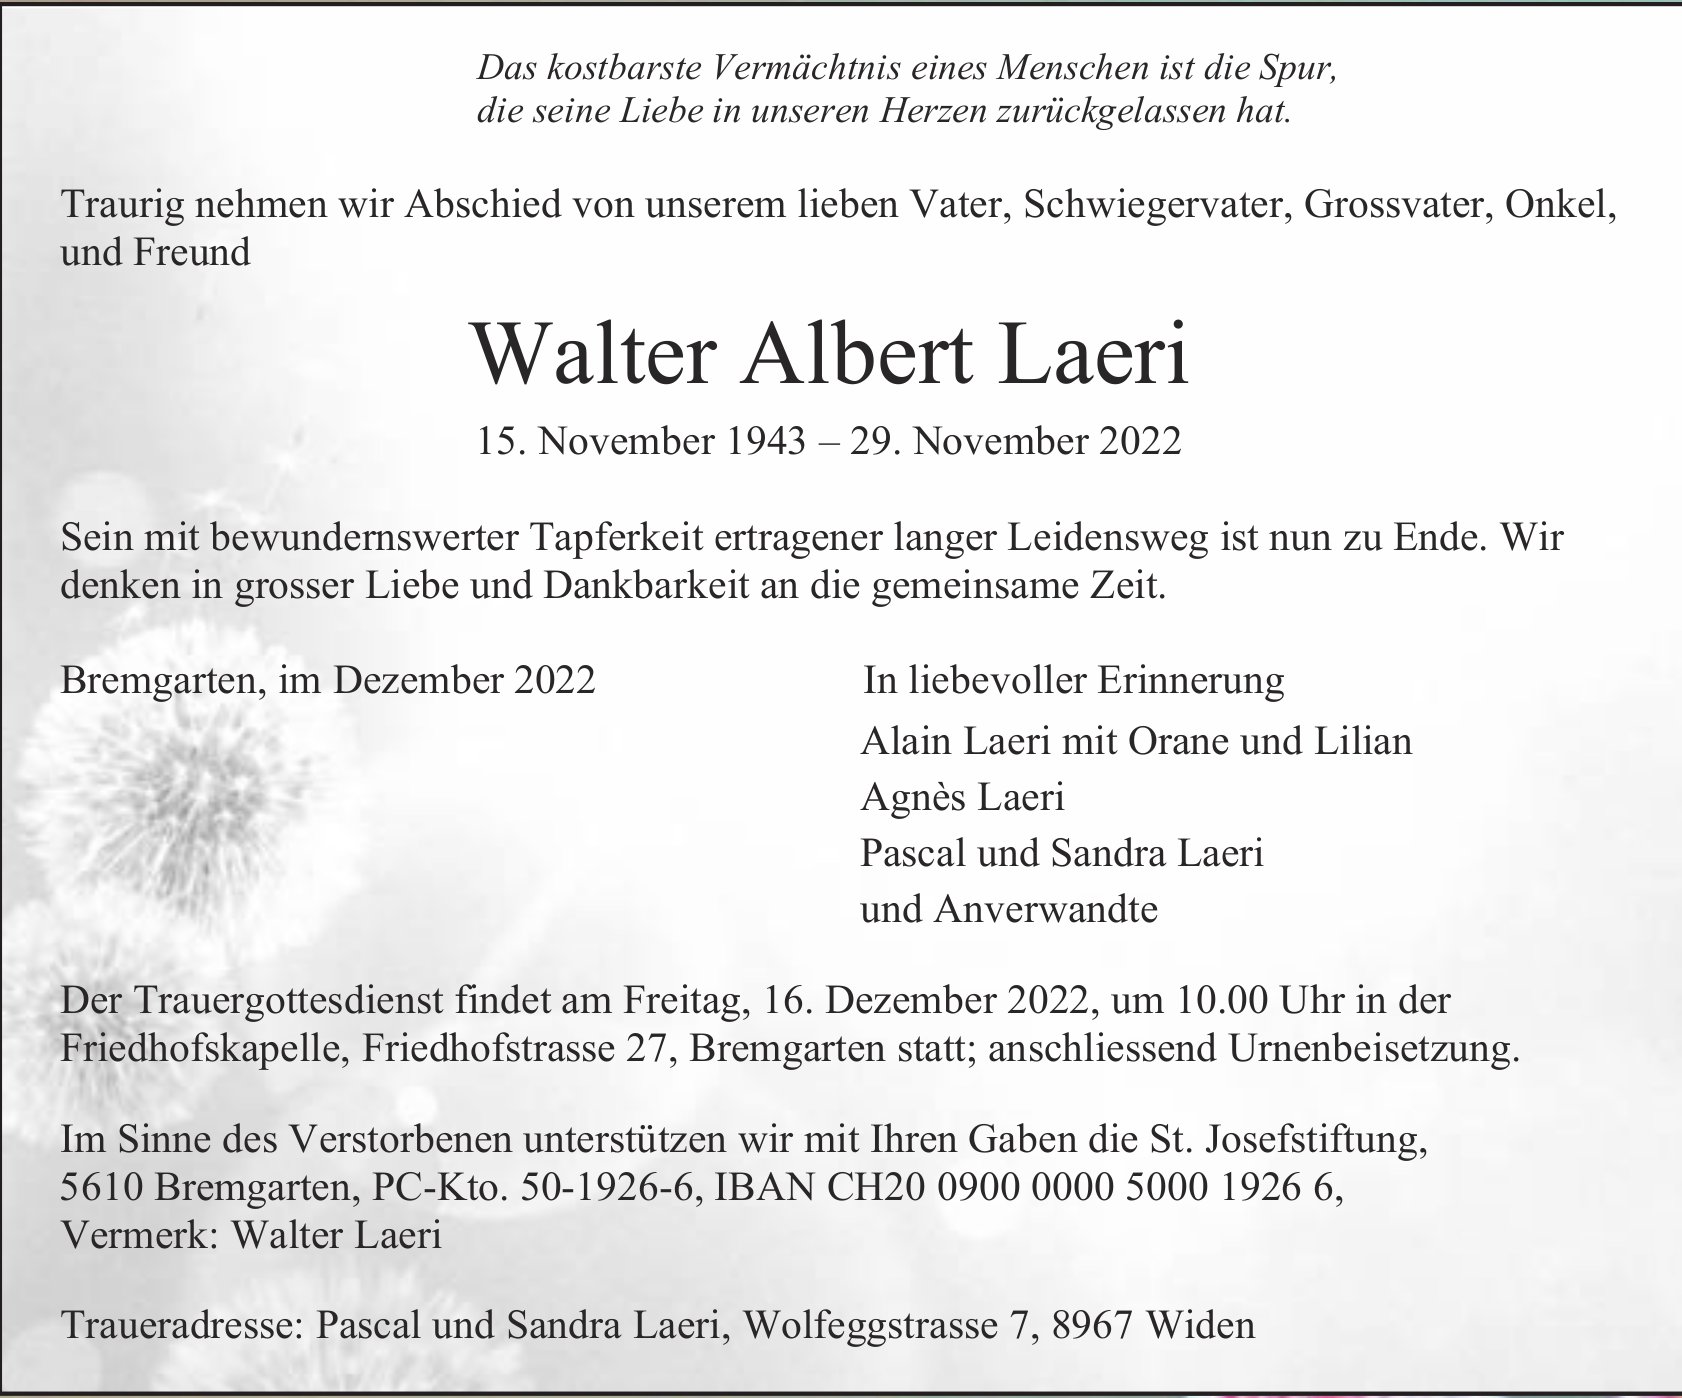 Walter Albert Laeri, November 2022 / TA